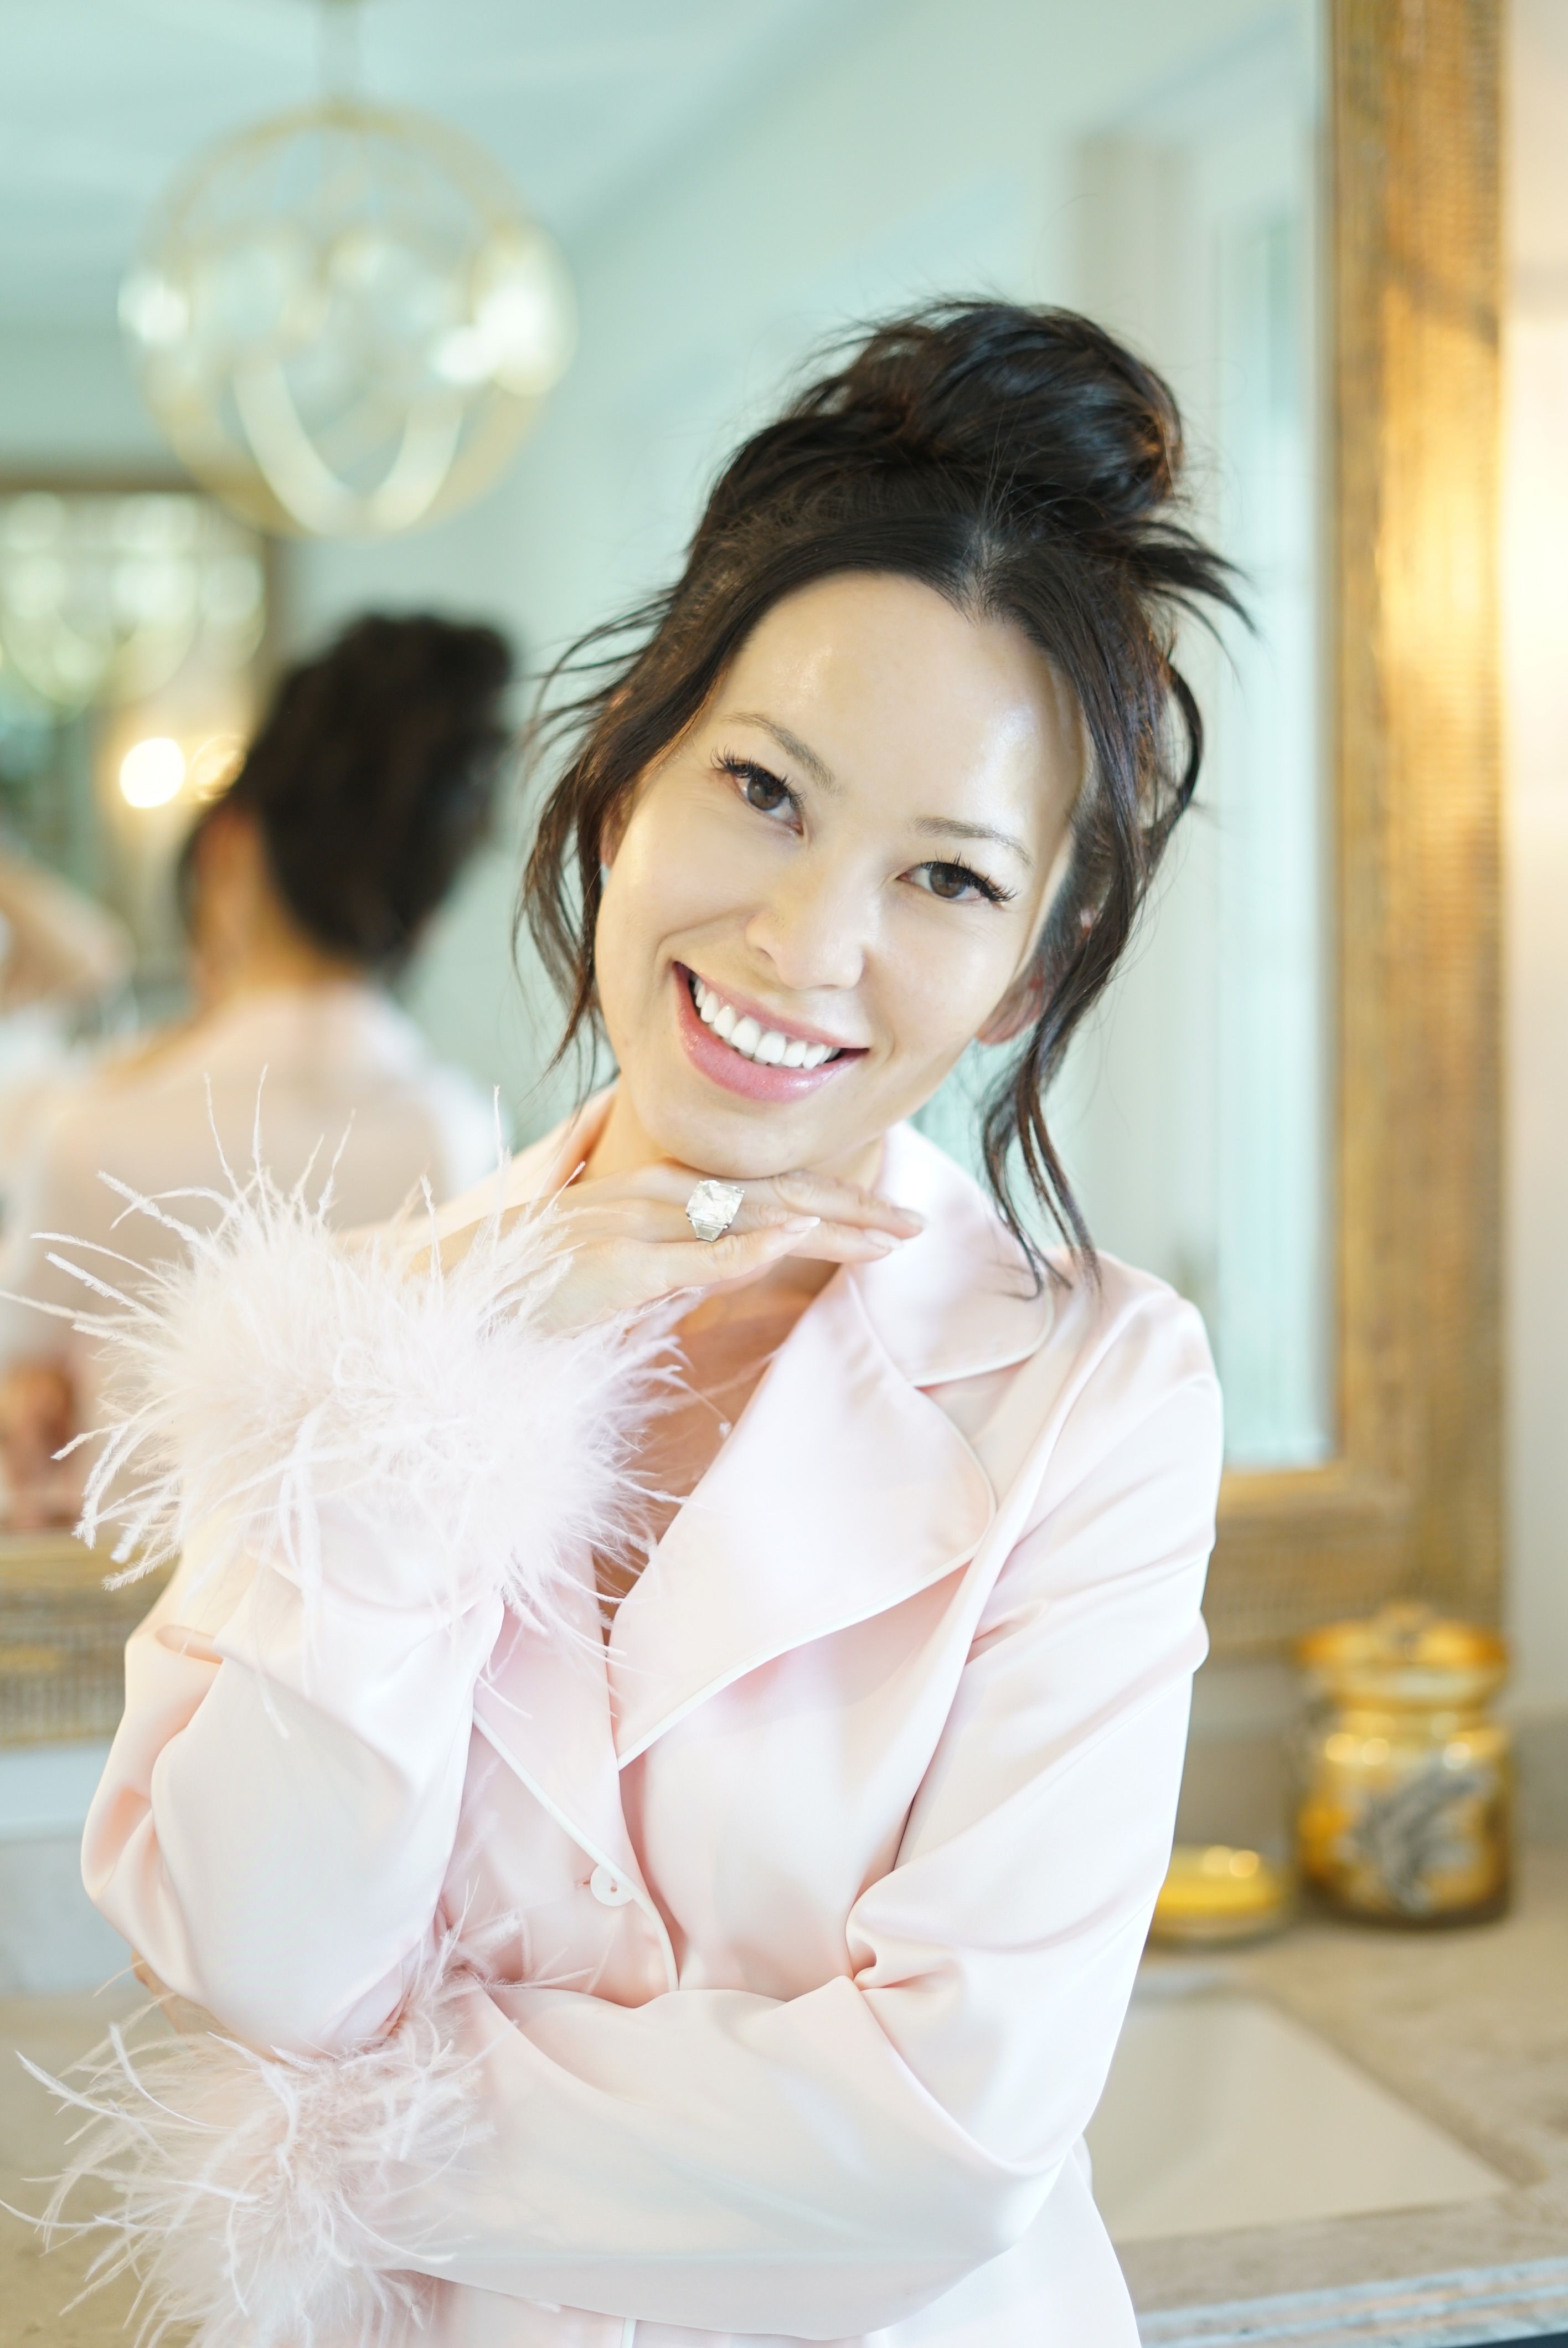 Bling Empire Star Christine Chiu's Skin-Care Routine